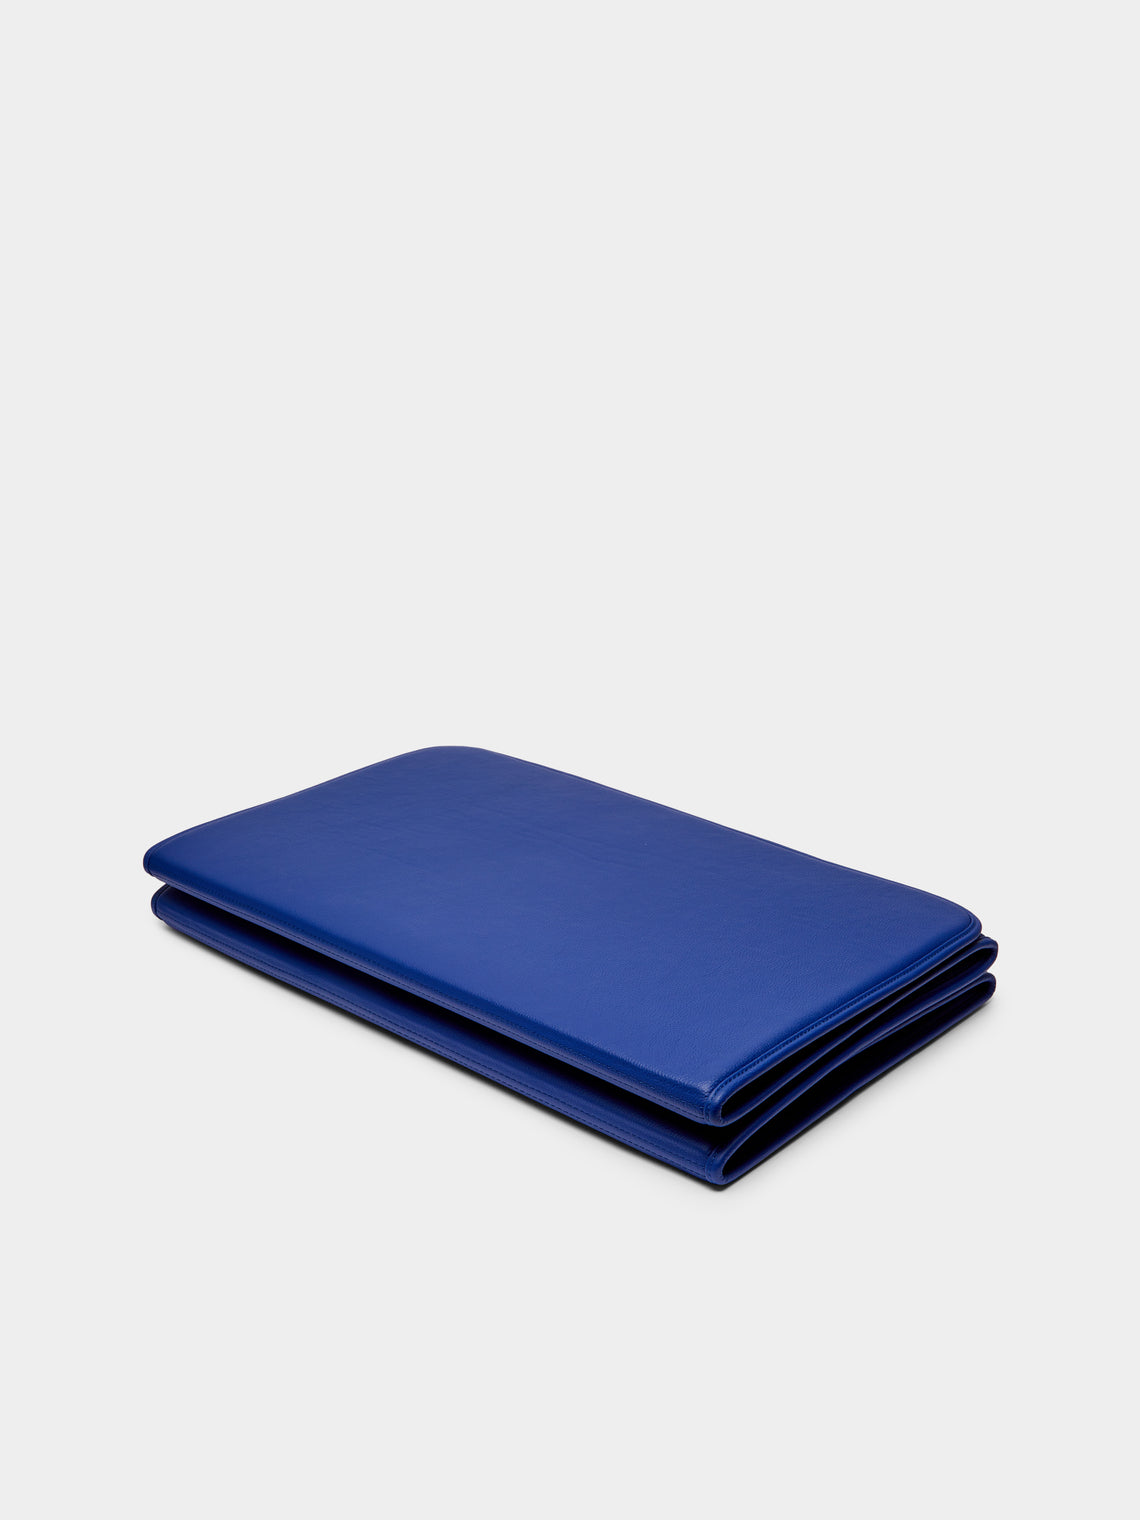 Giobagnara x Poltrona Frau - Leather Yoga Mat with Holder -  - ABASK